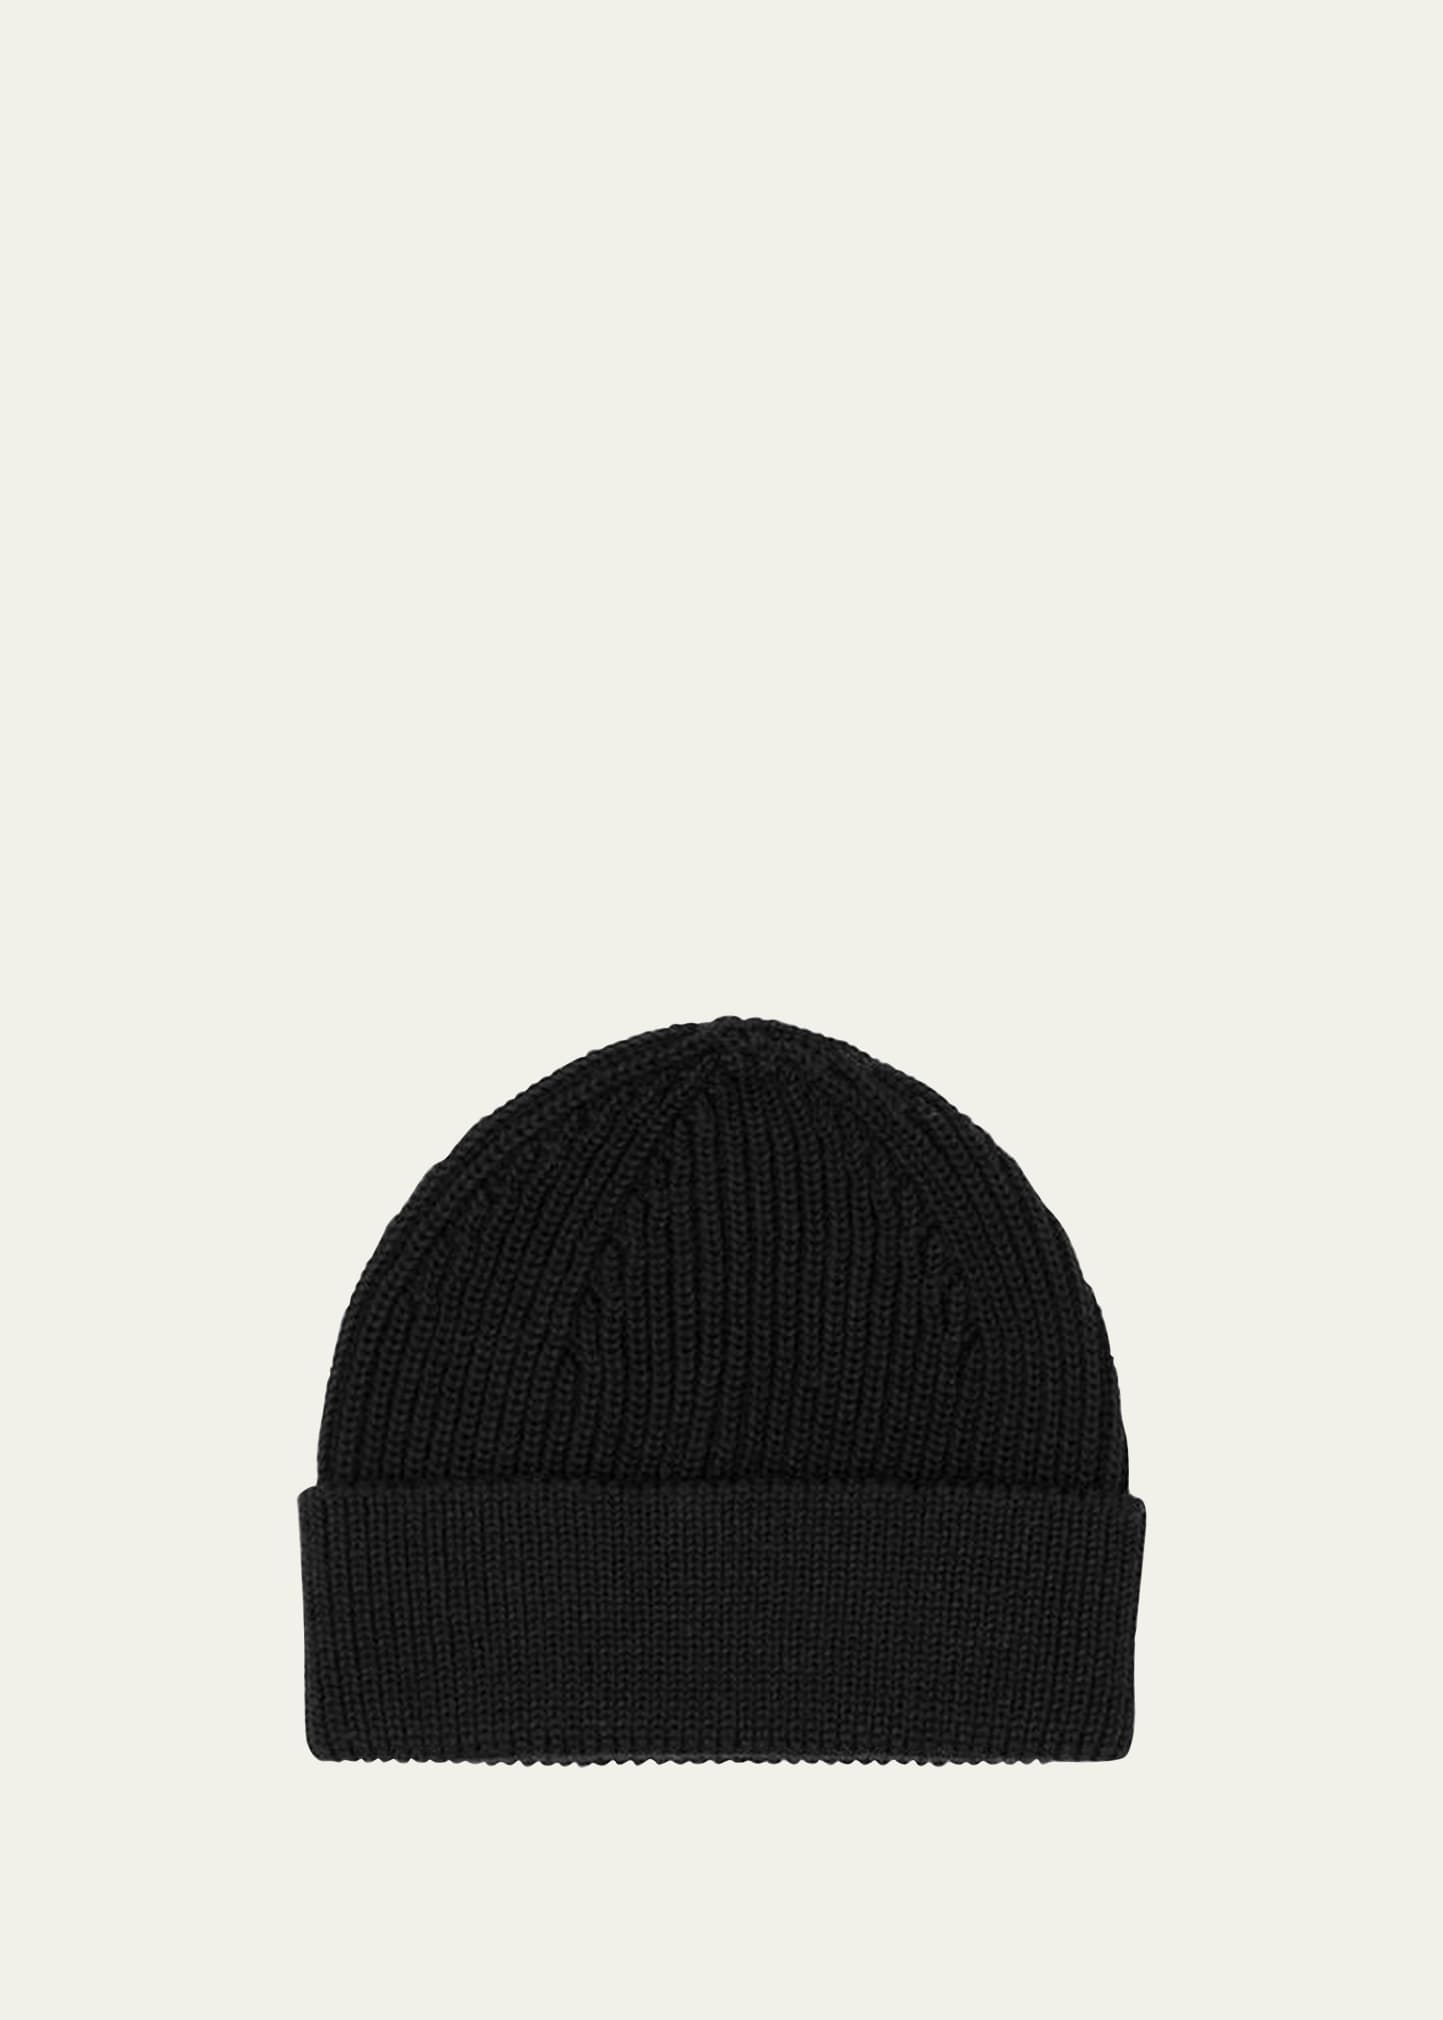 ANDERSEN-ANDERSEN Men's Wool Medium Beanie Hat